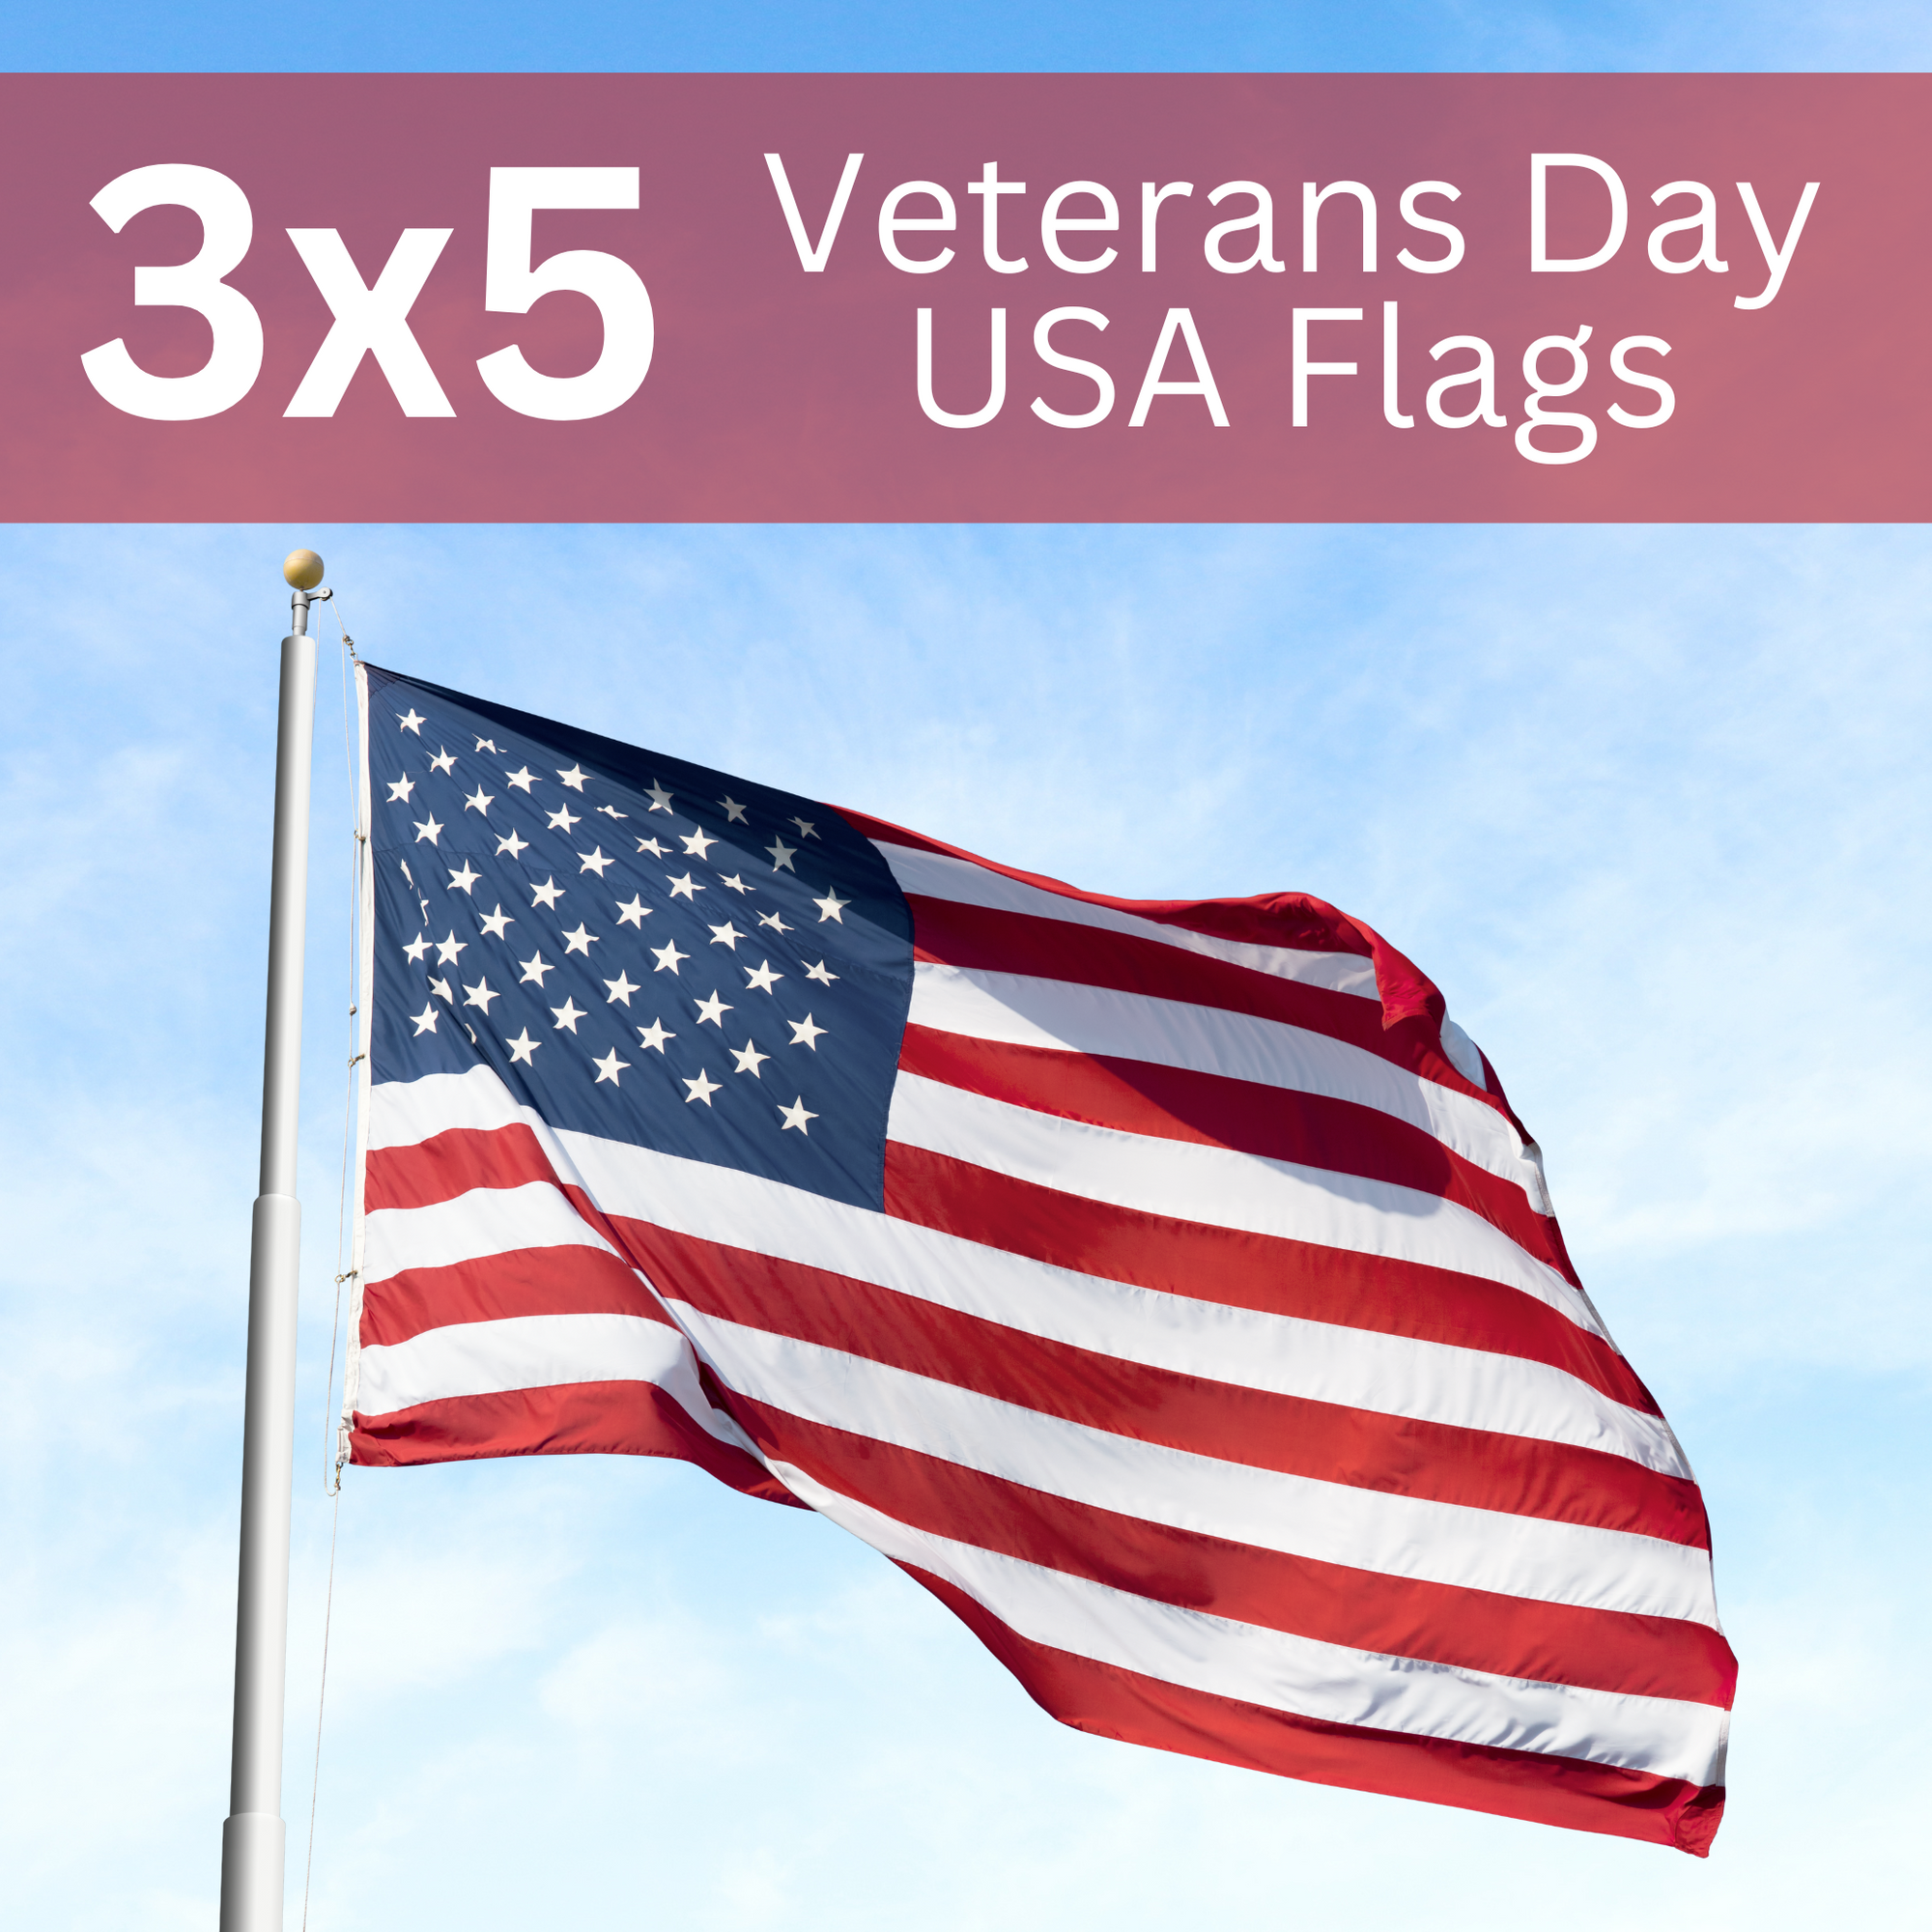 3x5 Veteran's Day USA Flag Flown On USS Arizona Memorial At Pearl Harbor